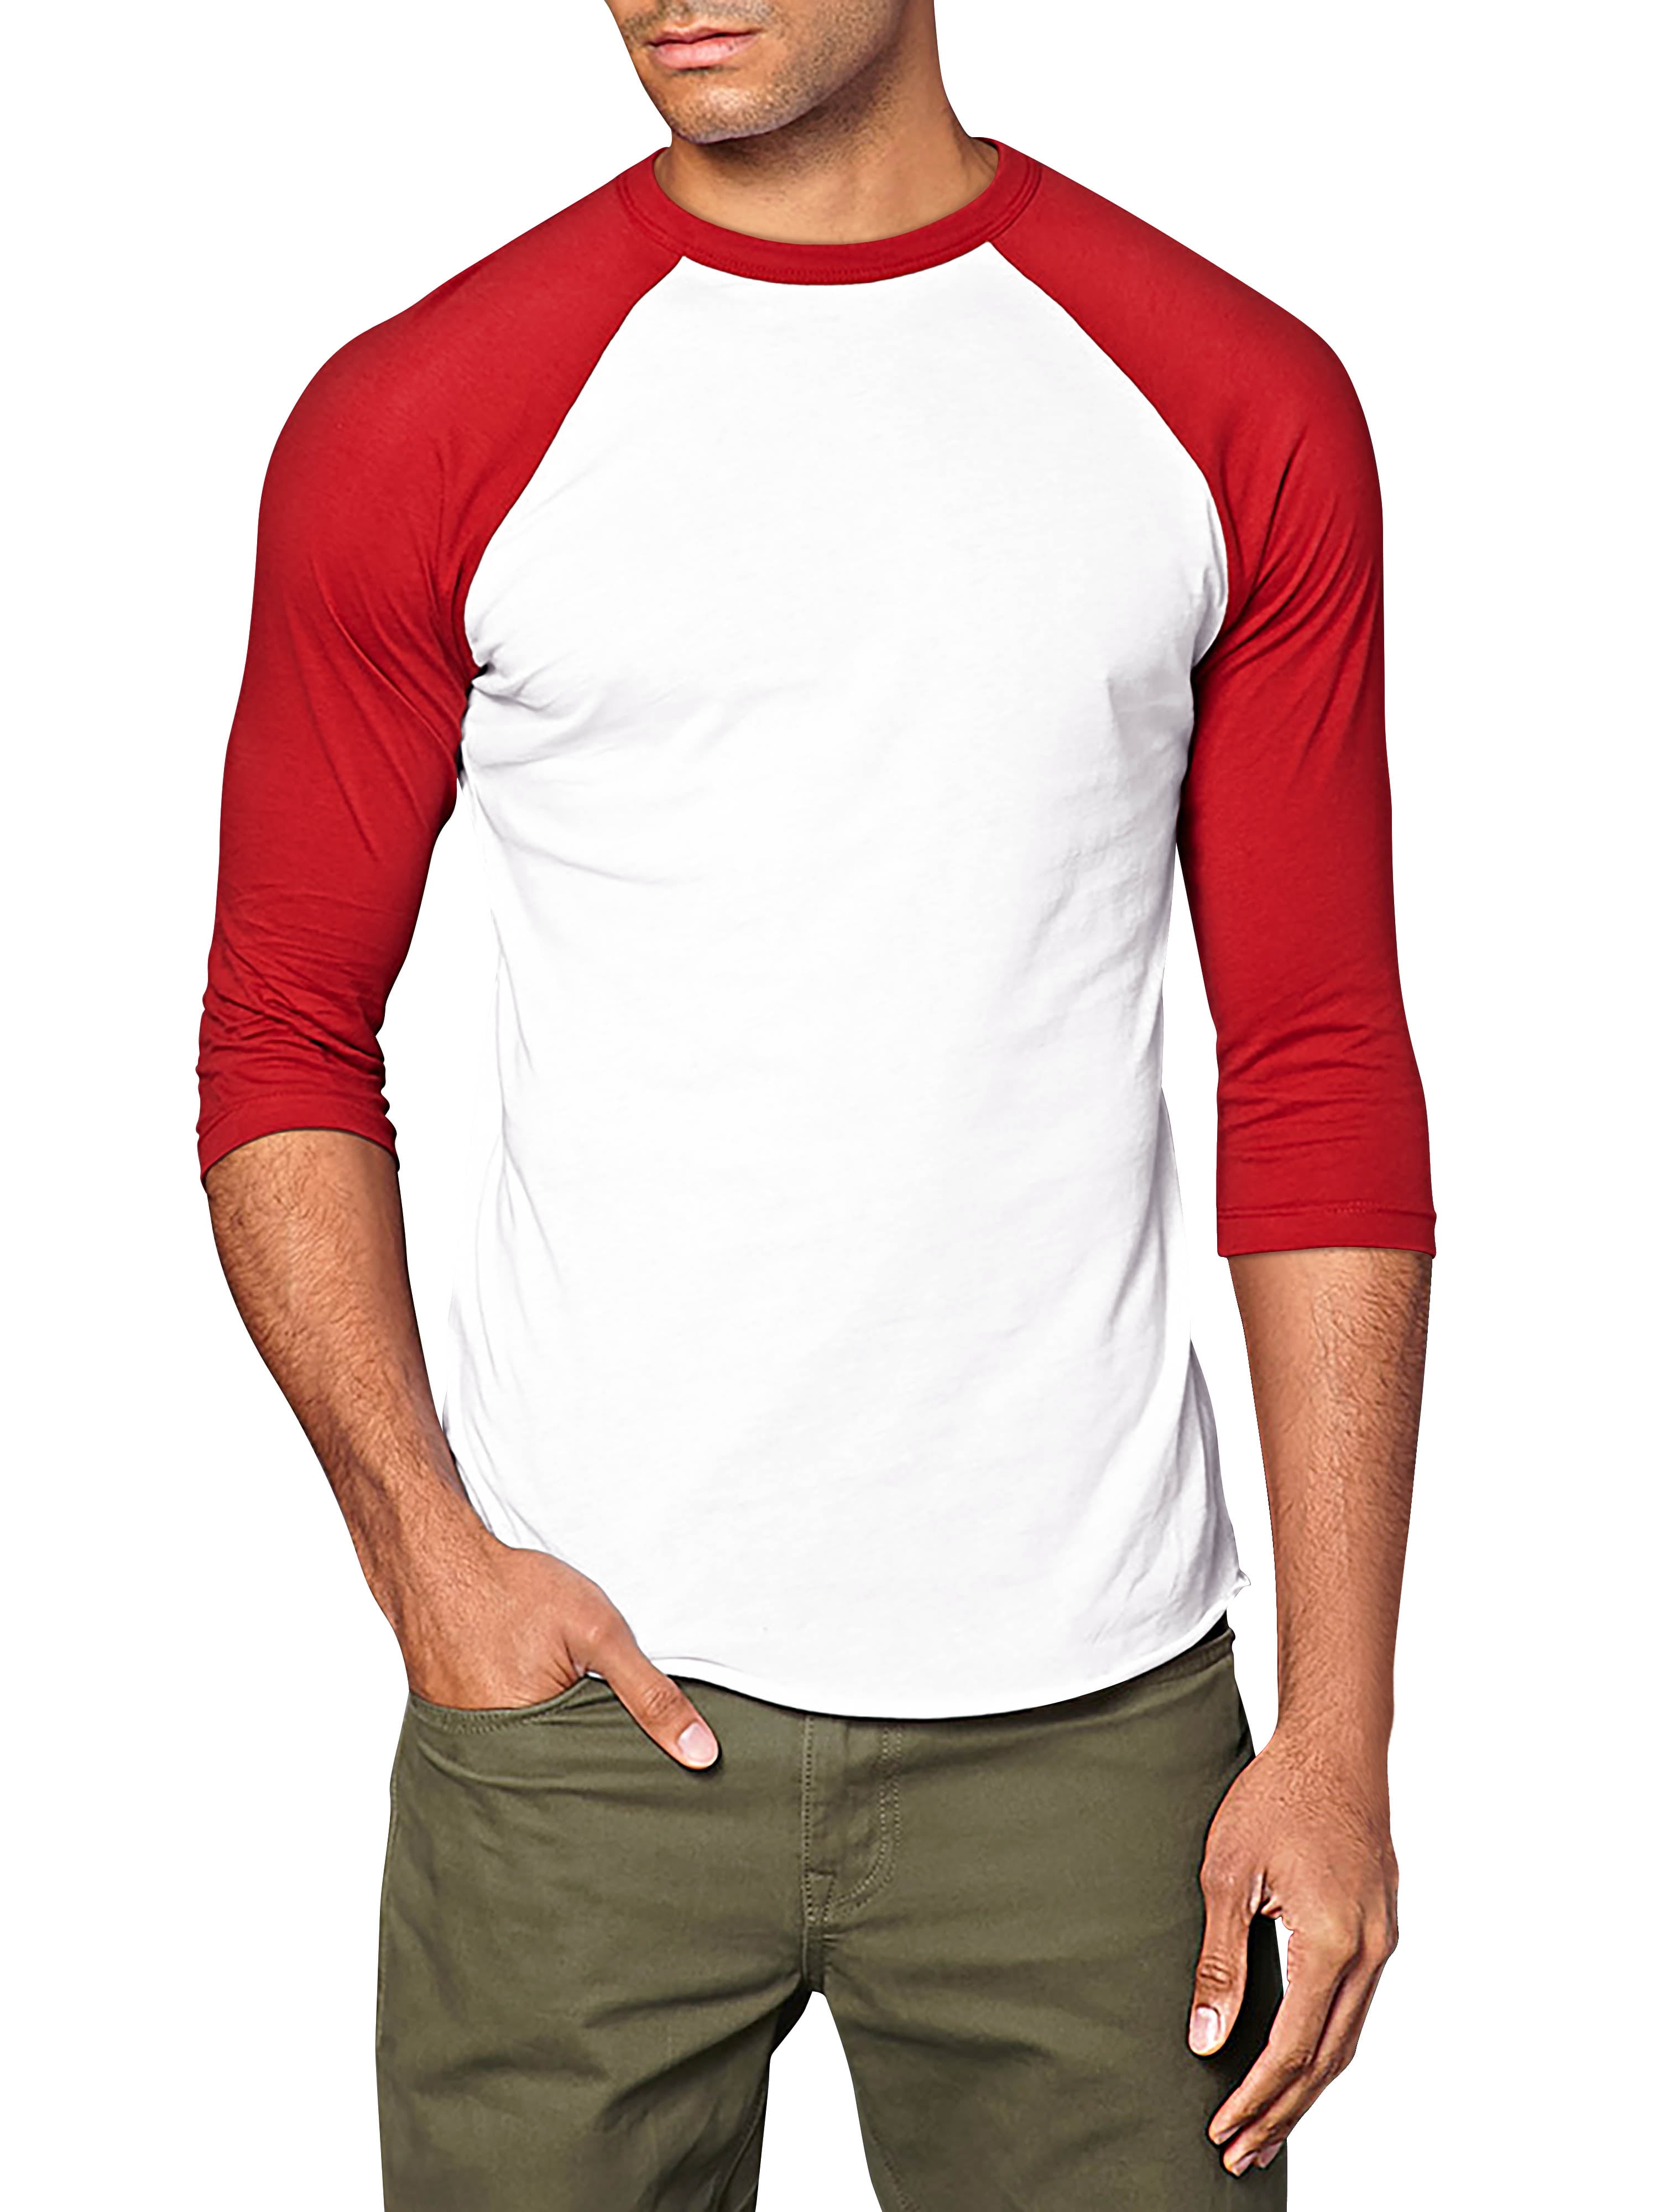 Mens 3/4 Sleeve Raglan Baseball T Shirt